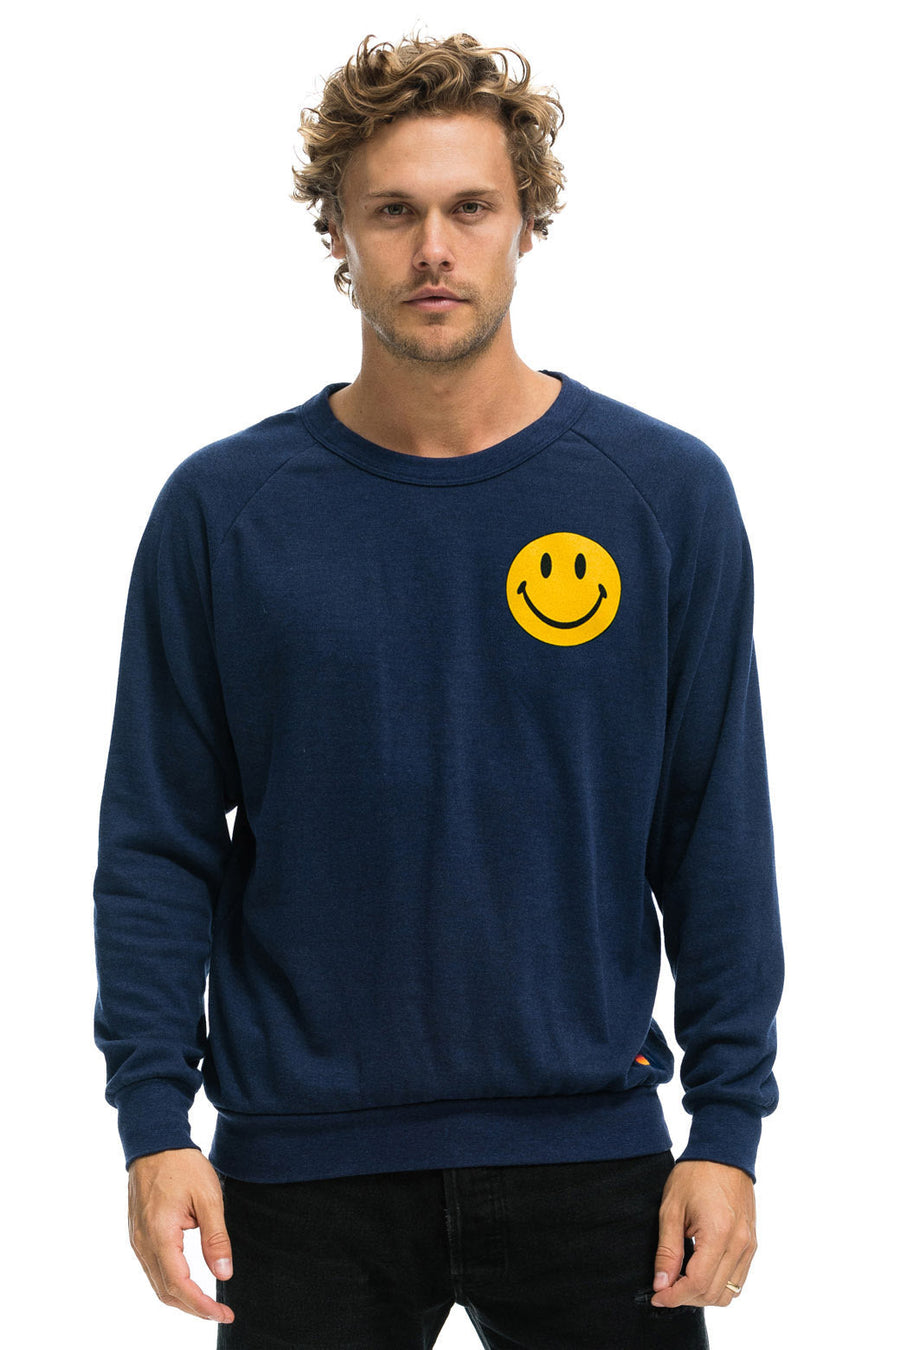 Smiley 2 Sweatshirt Navy - blueandcream